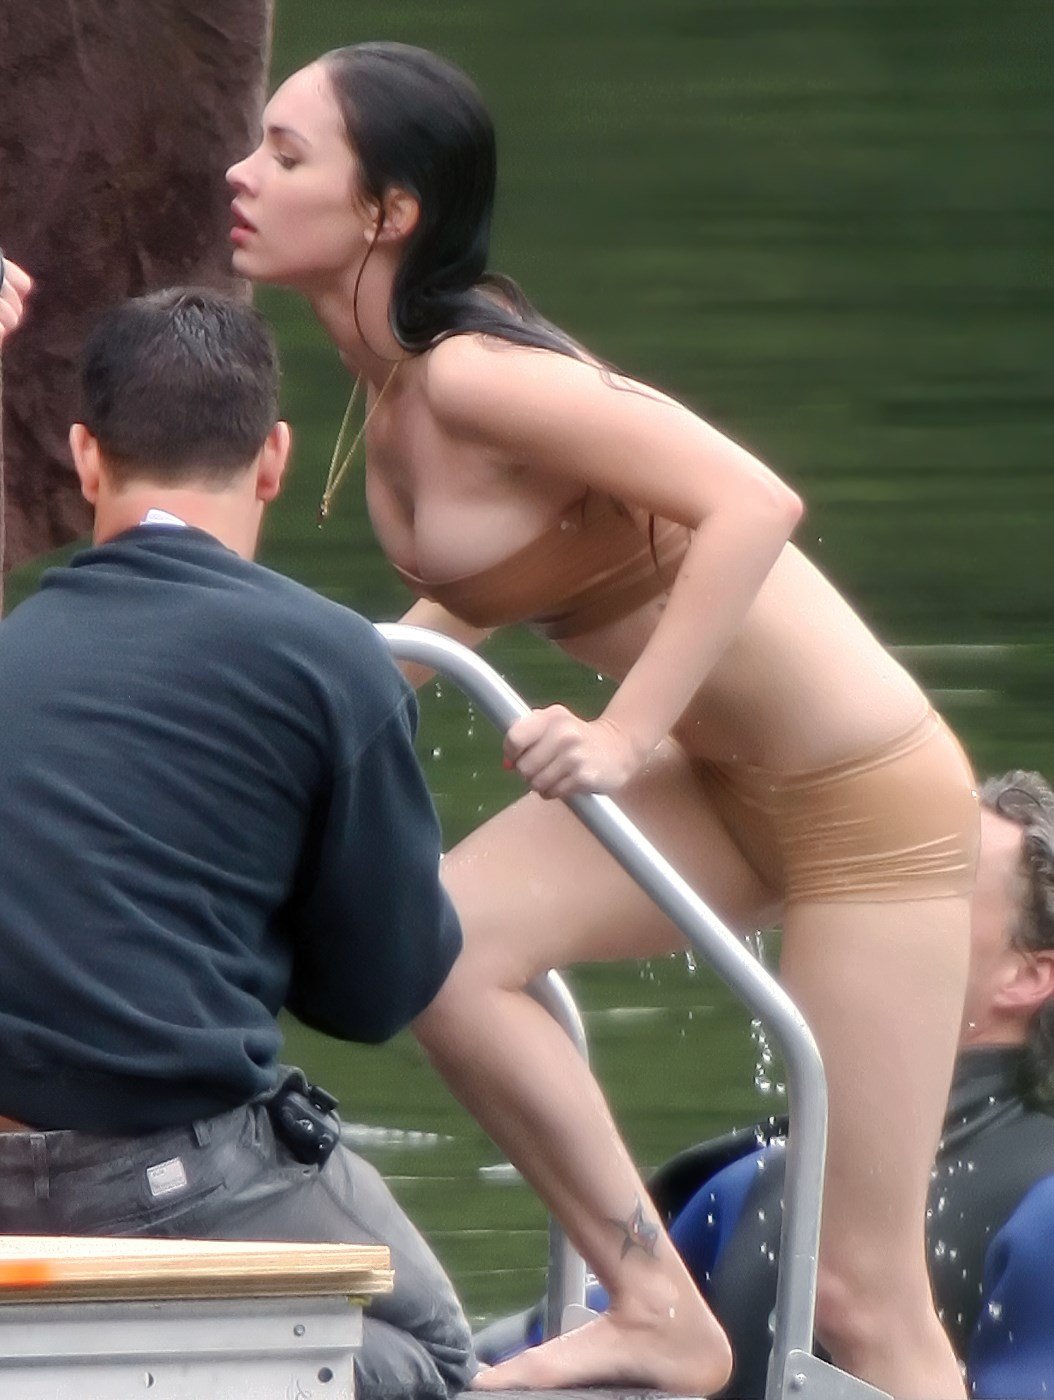 Megan Fox Nude Photos Remastered And Enhanced